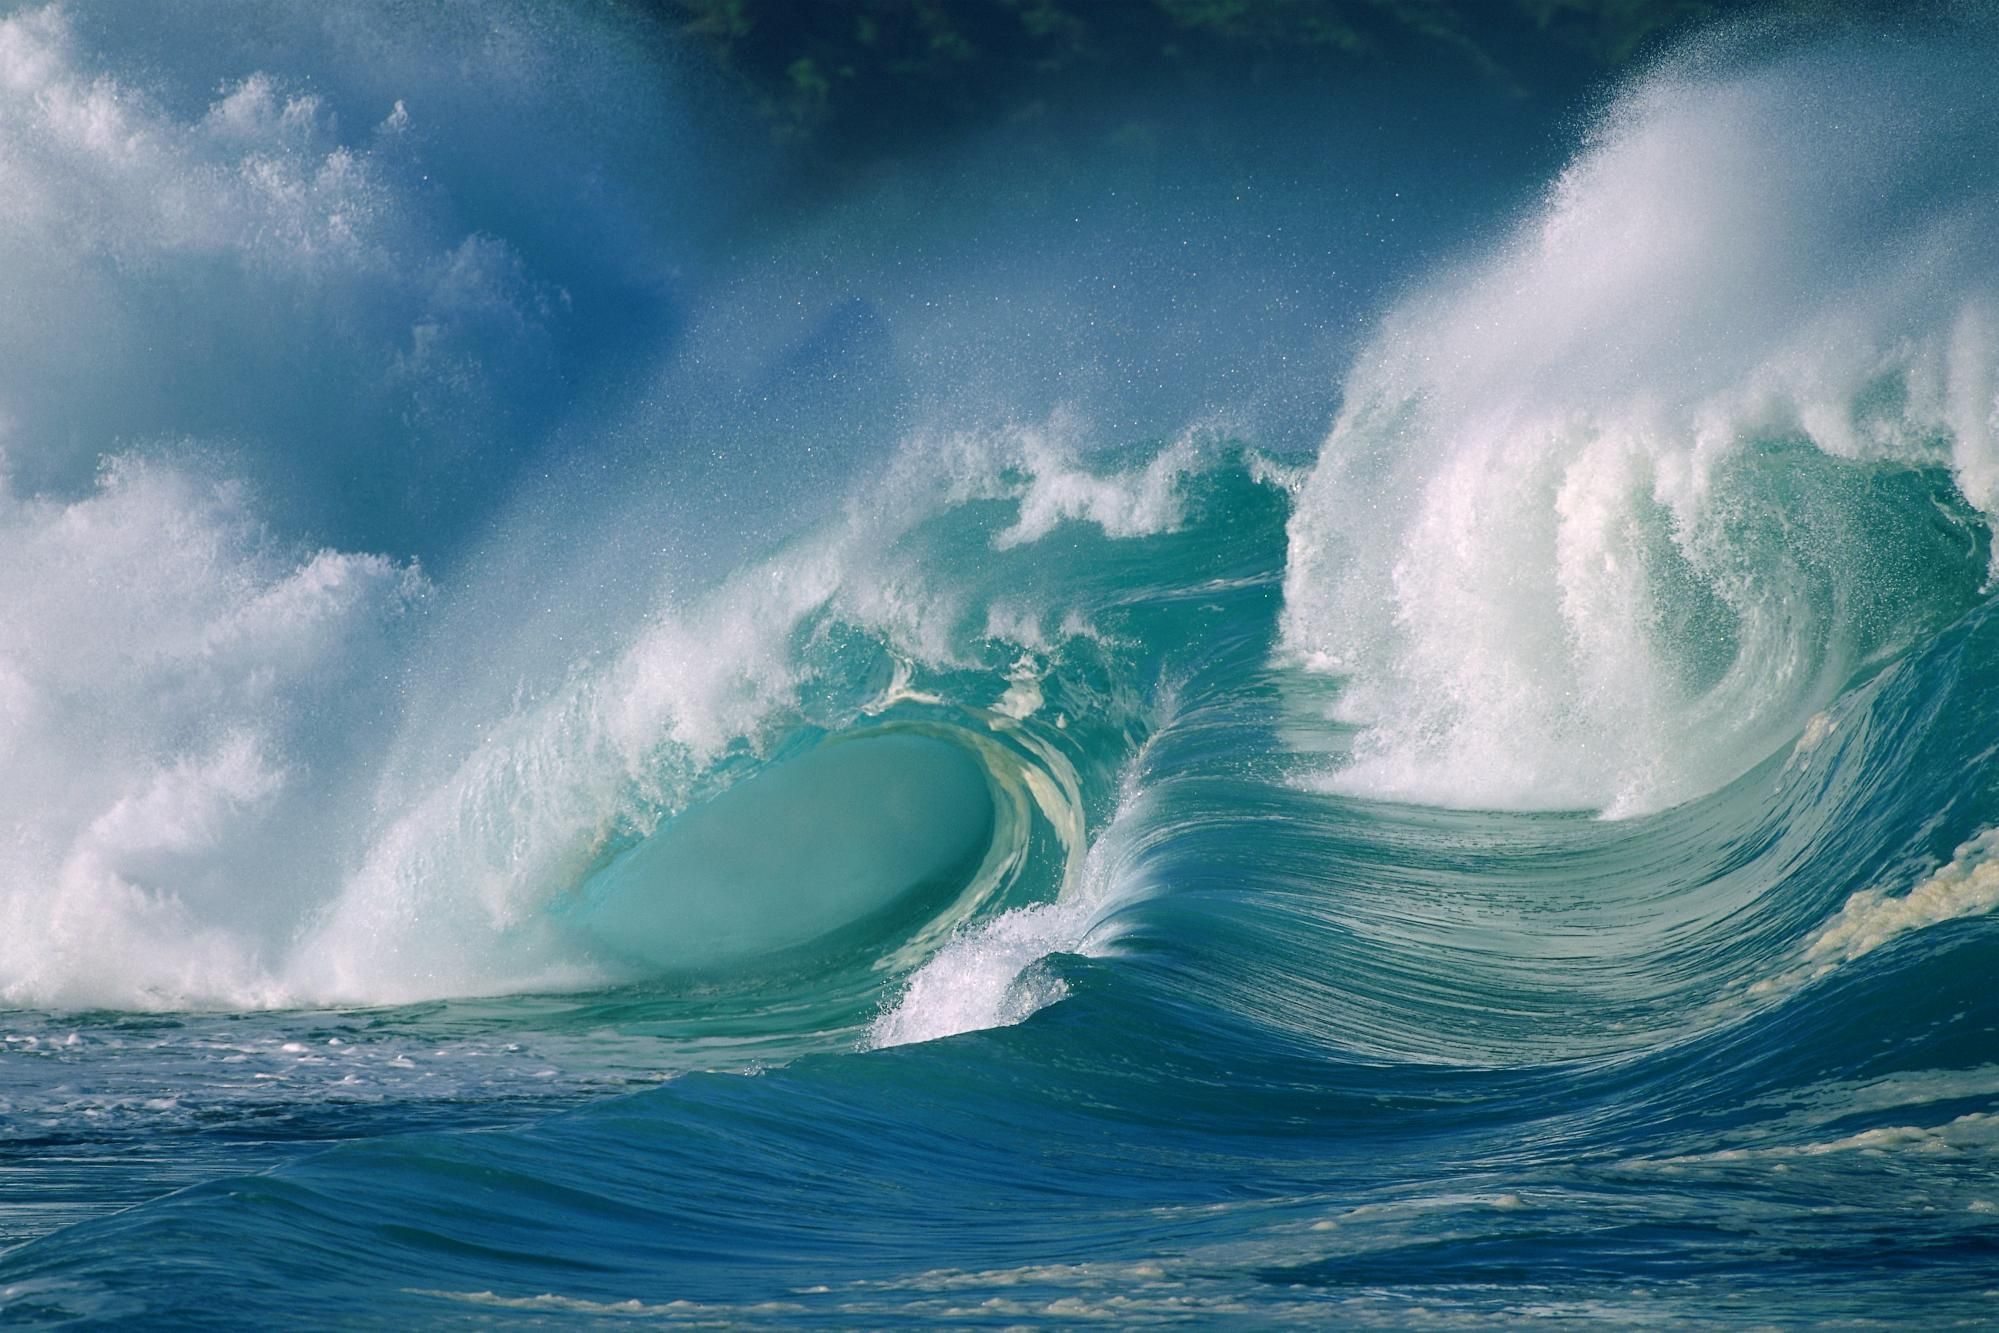 ☀ c e a n ☁. Ocean waves, Waves, Ocean wallpaper